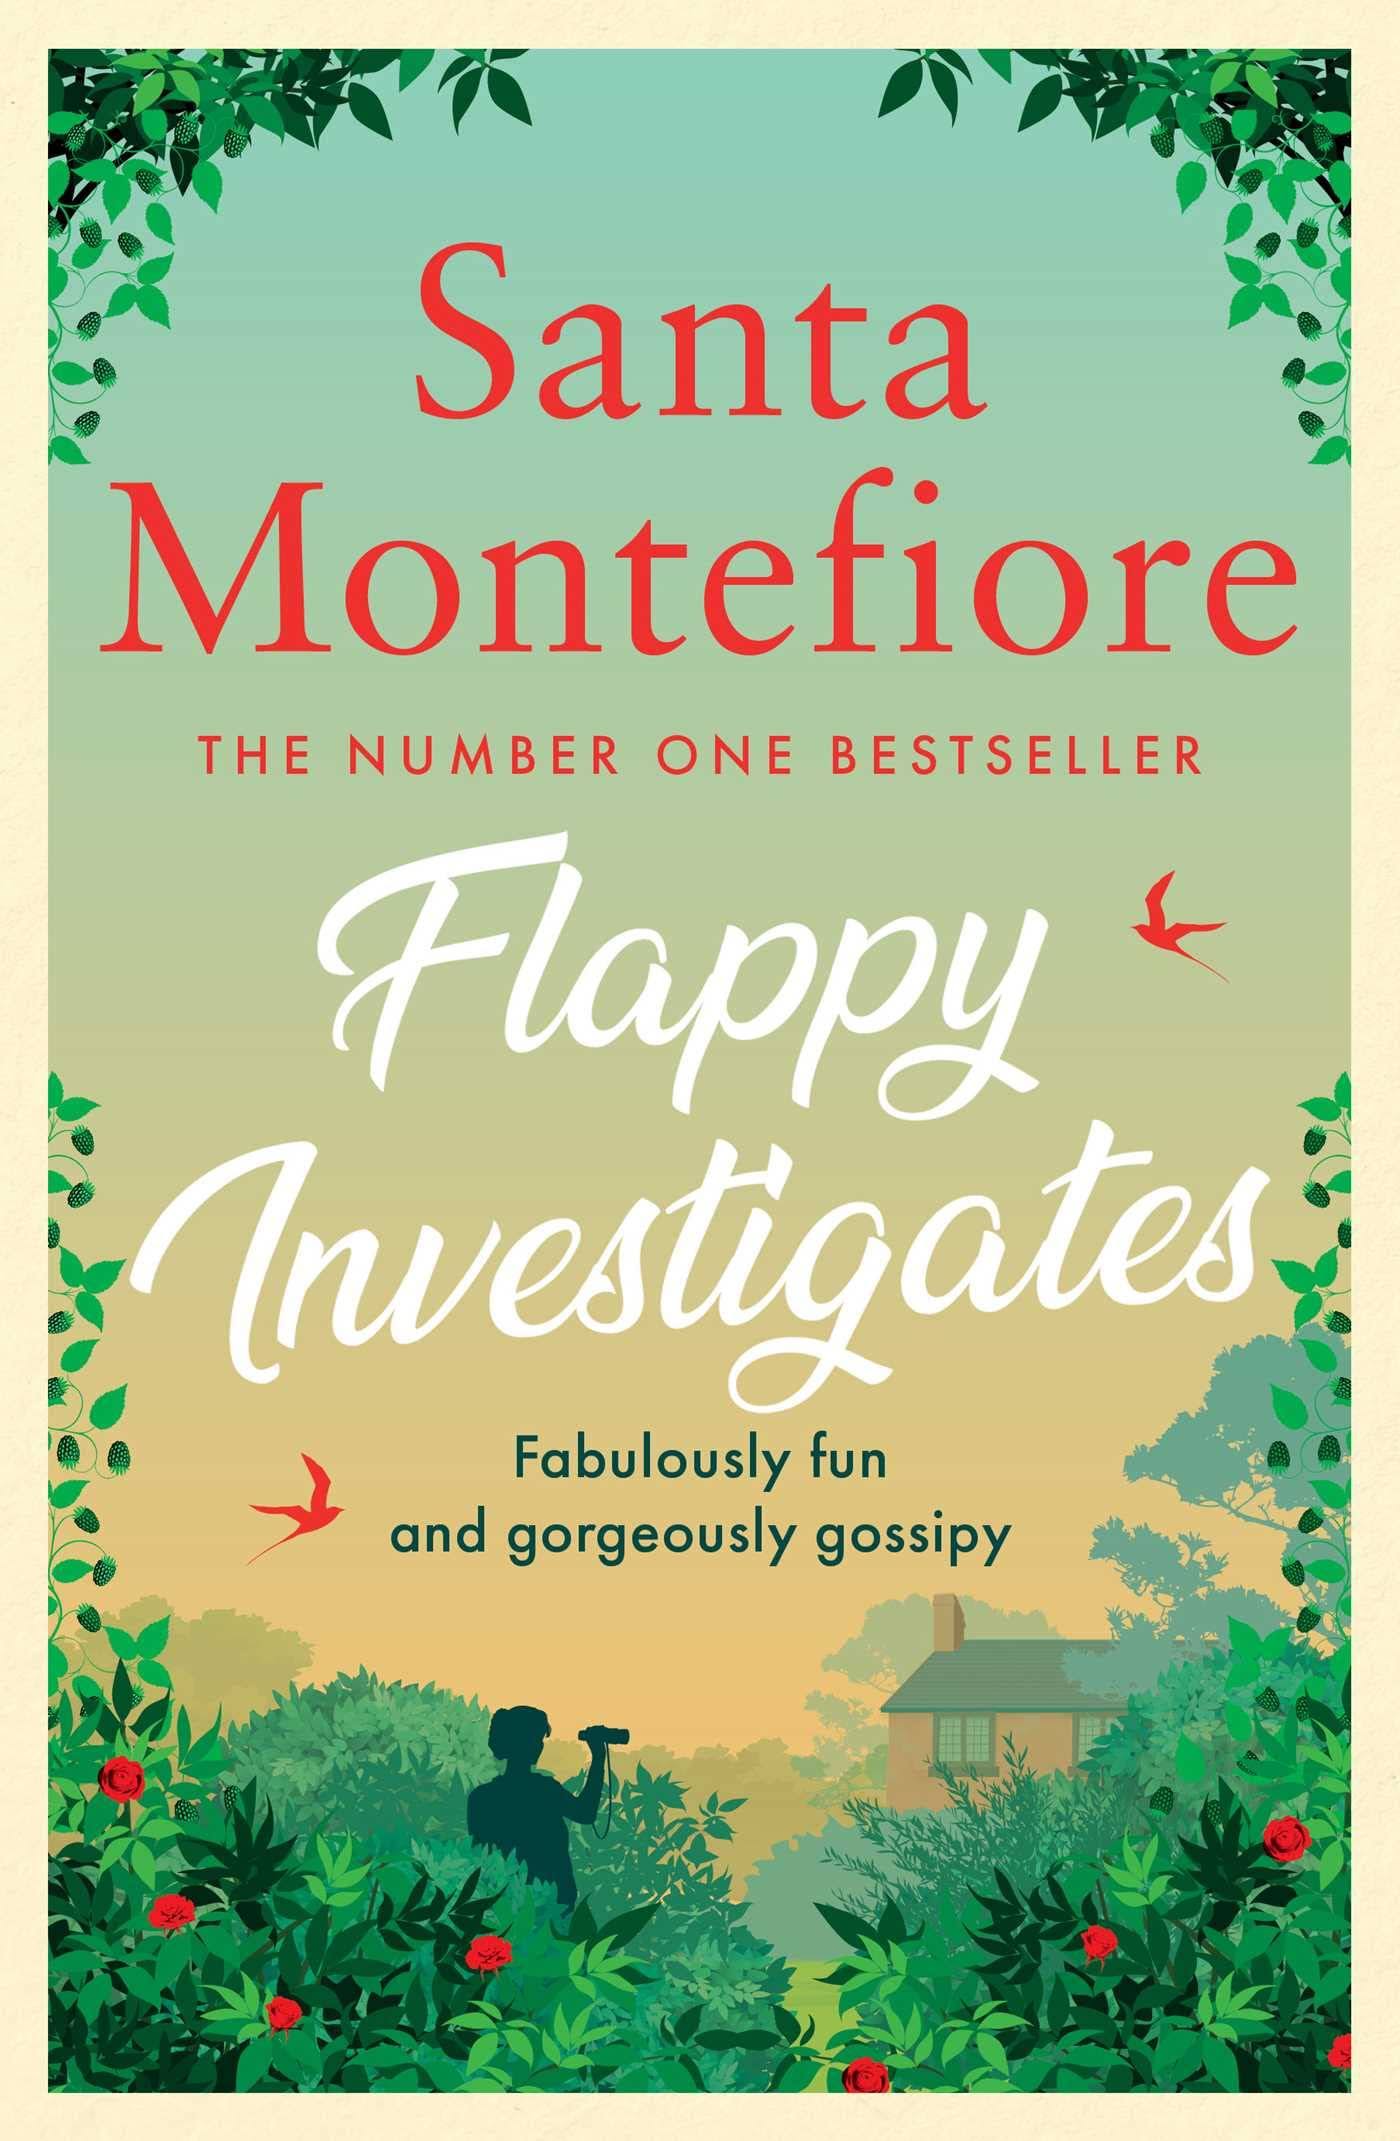 Flappy Investigates by Santa Montefiore